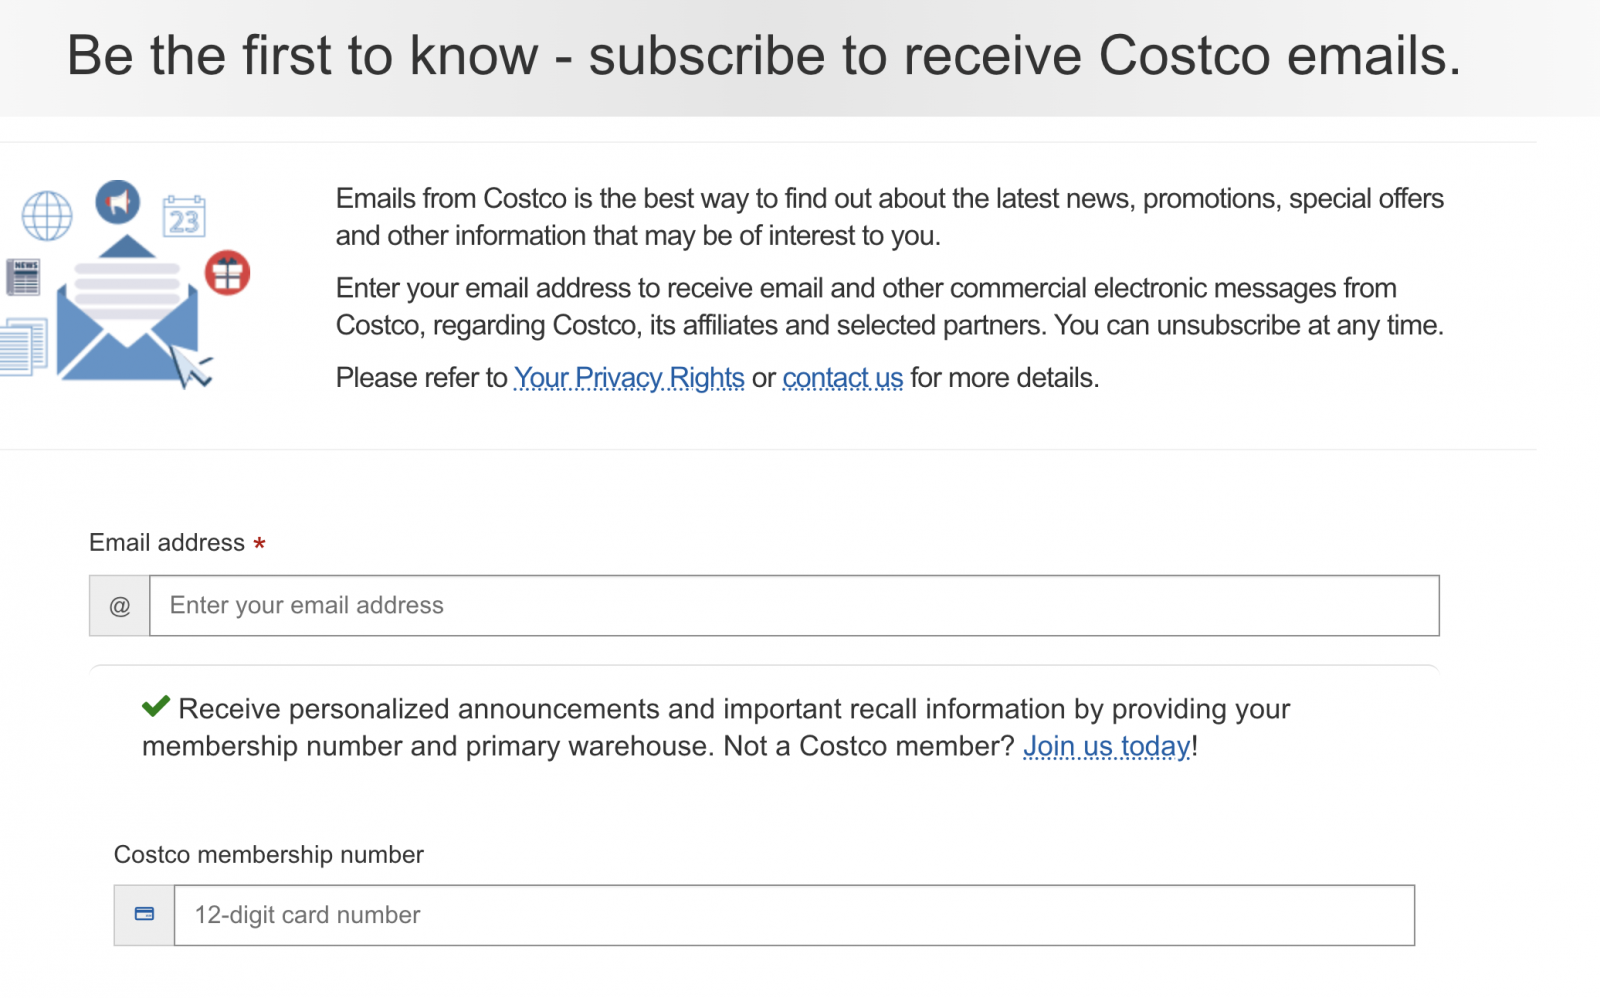 Costco exclusive deals and promo information